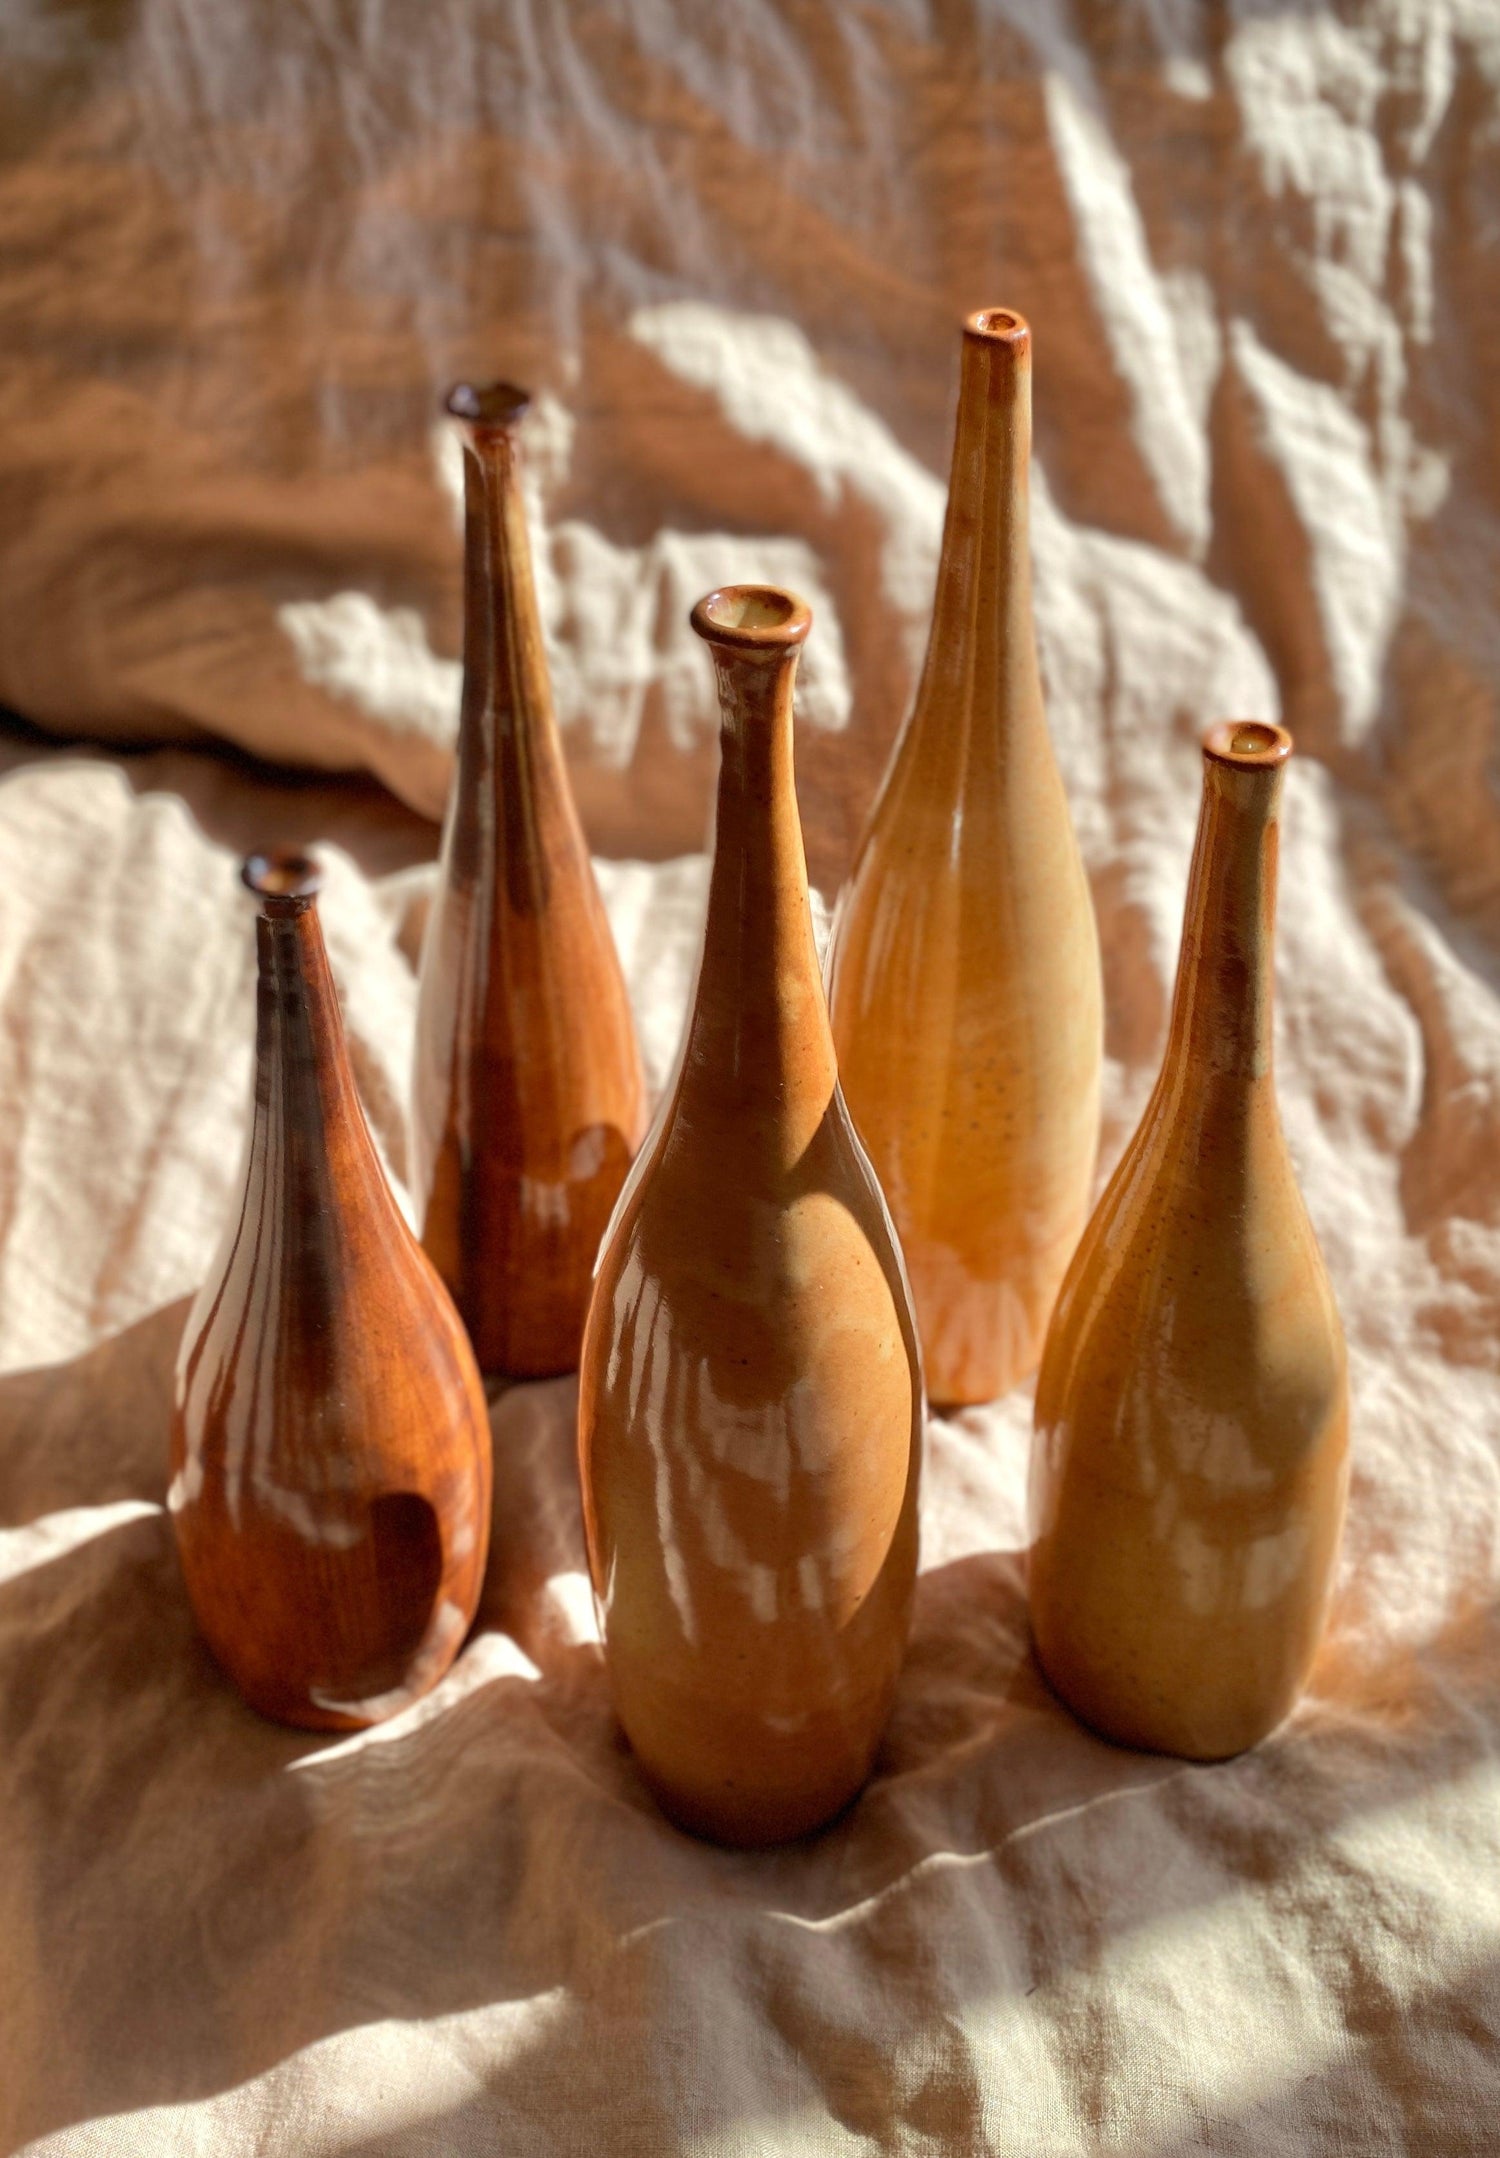 Shino decorative bottle brushed with iron oxide No. 12 - Dana Chieco Studio